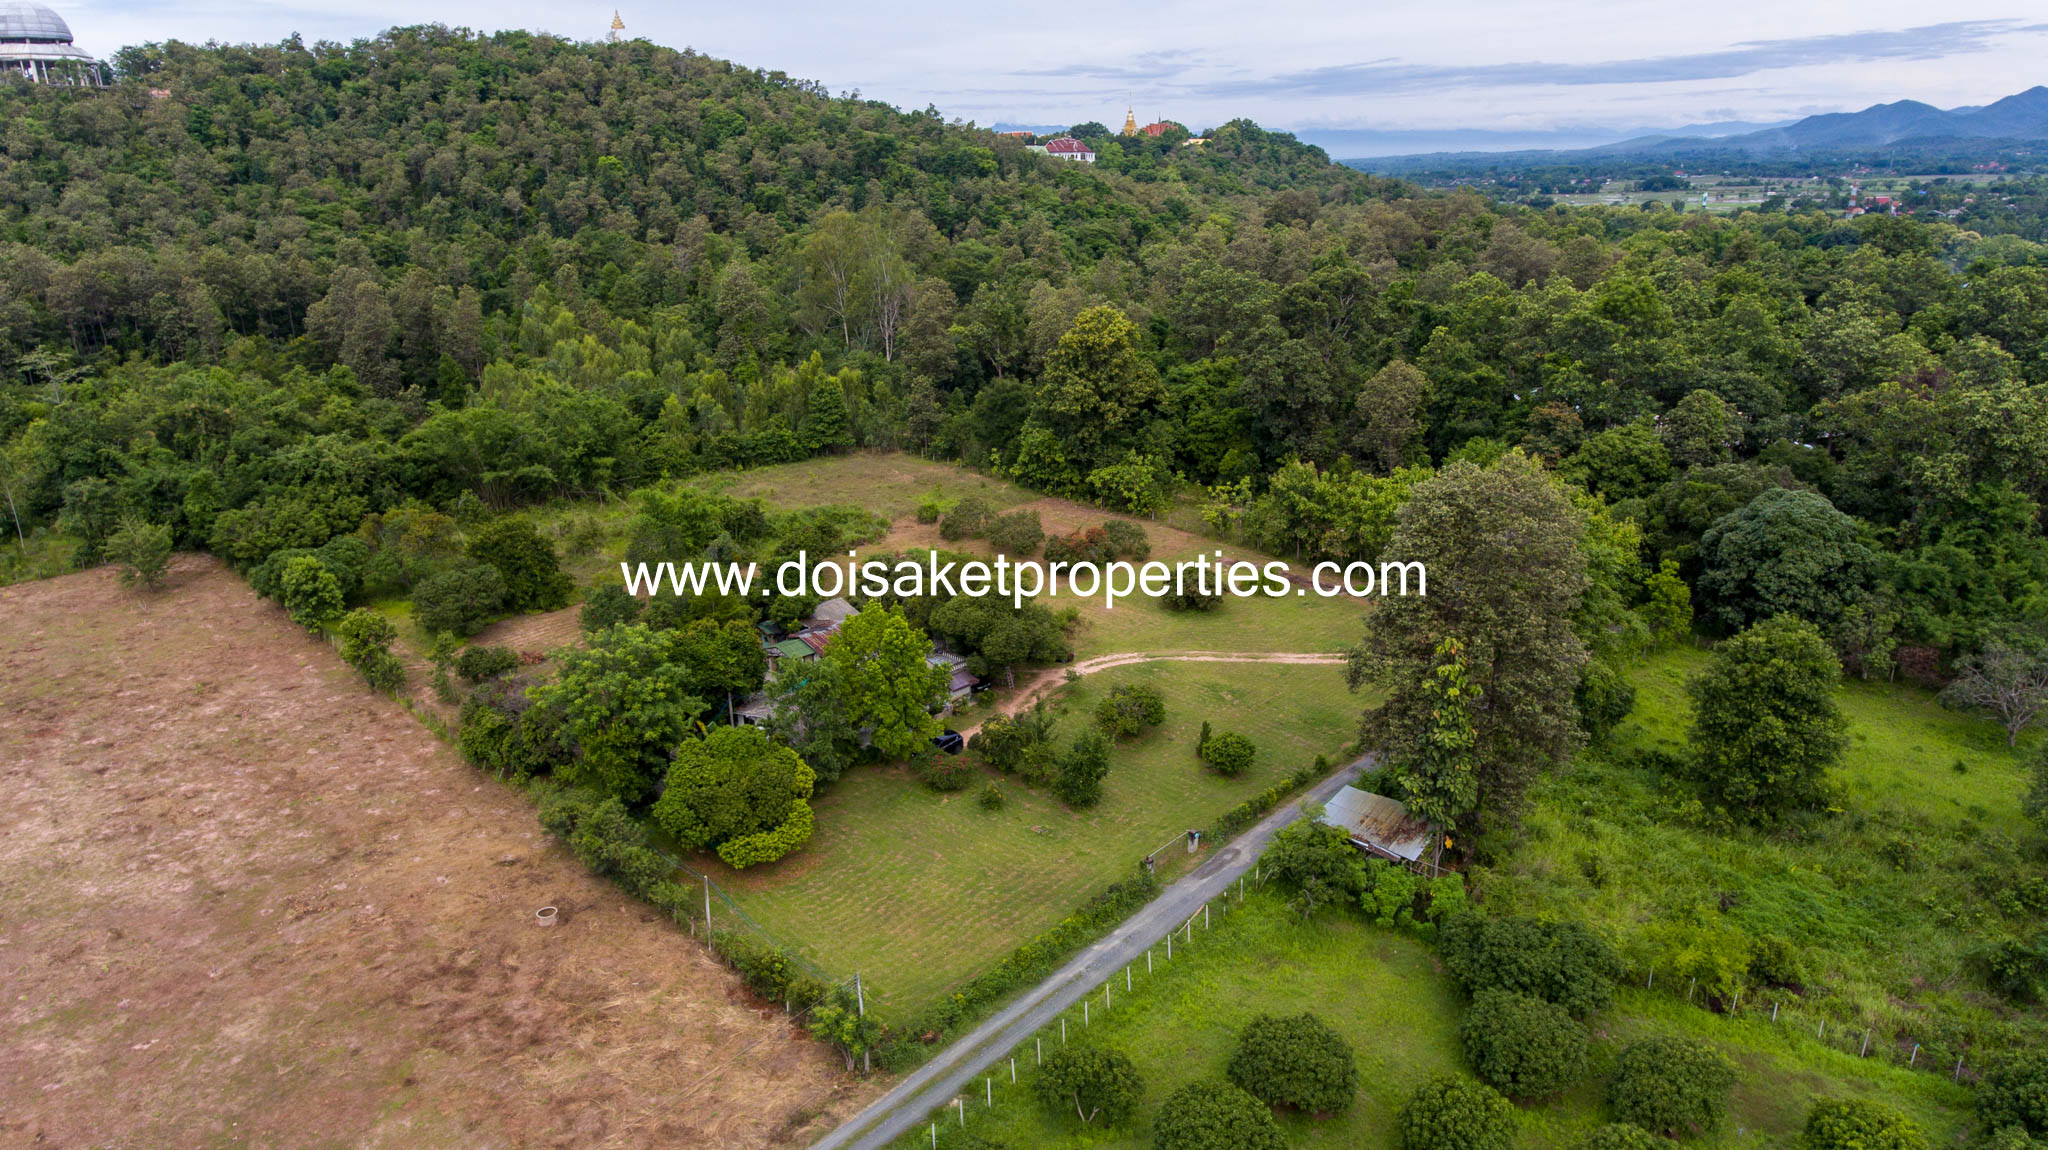 Doi Saket-DSP-(LS337-04) Nice 4+ Rai Plot of Land with Great Views for Sale in Doi Saket